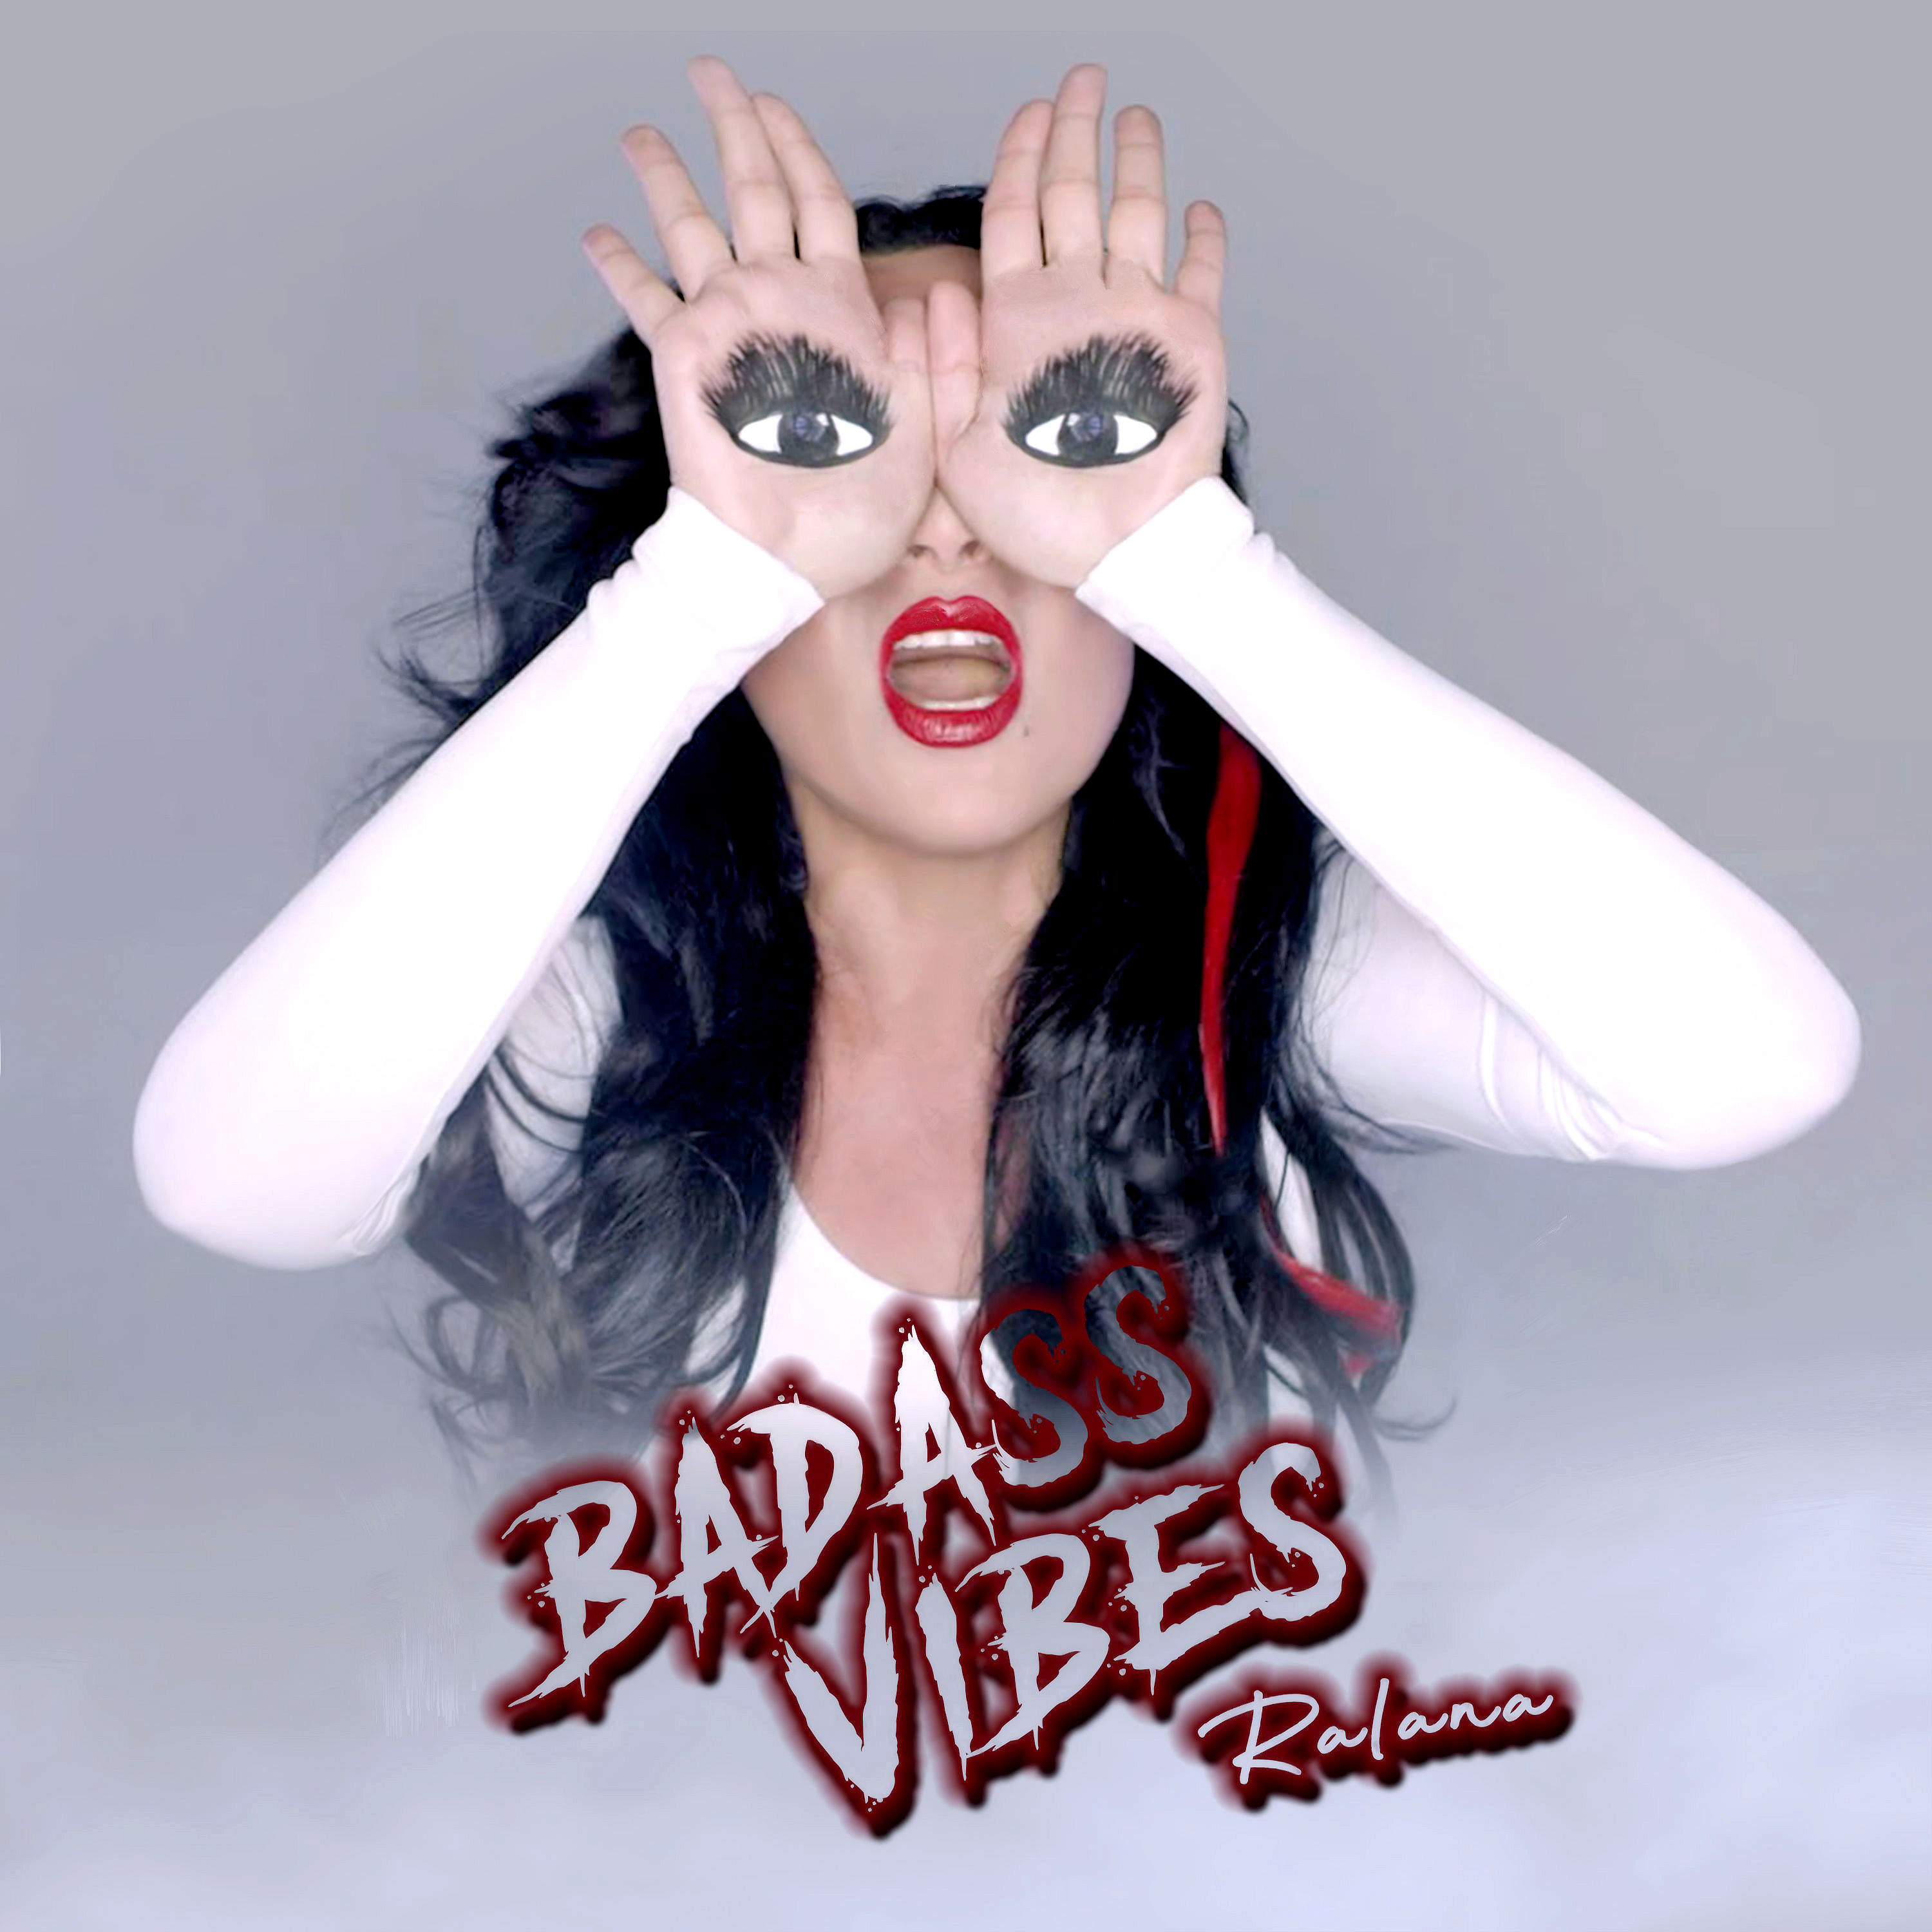 Ralana’s newest album “Badass Vibes” set the EDM world on fire